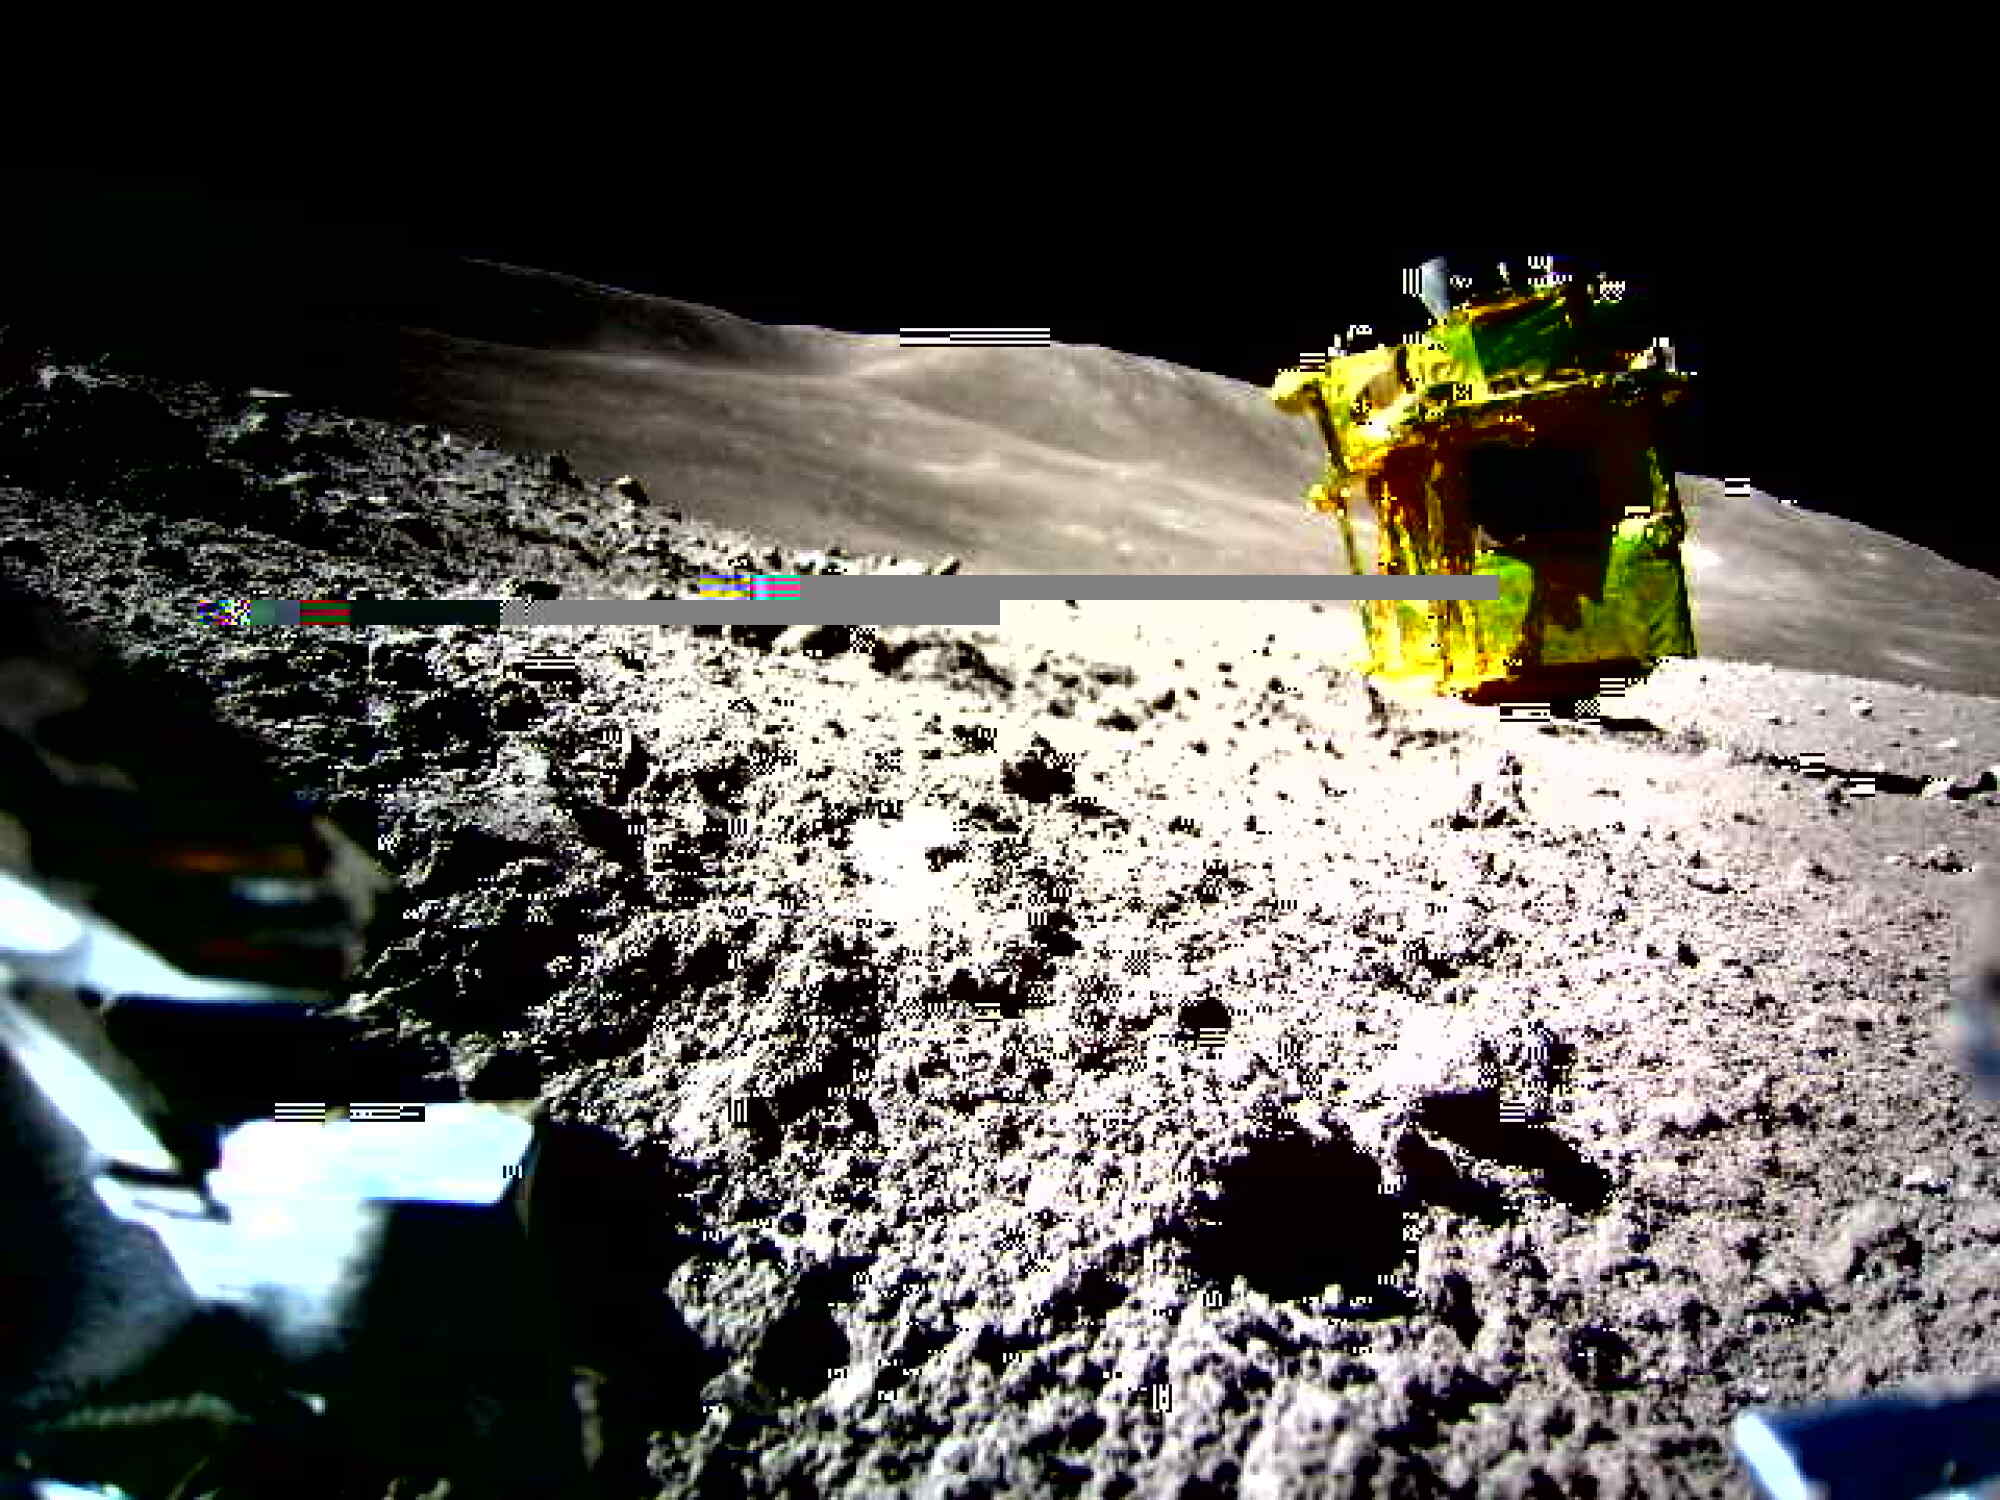 a moon rover imaged the SLIM moon lander